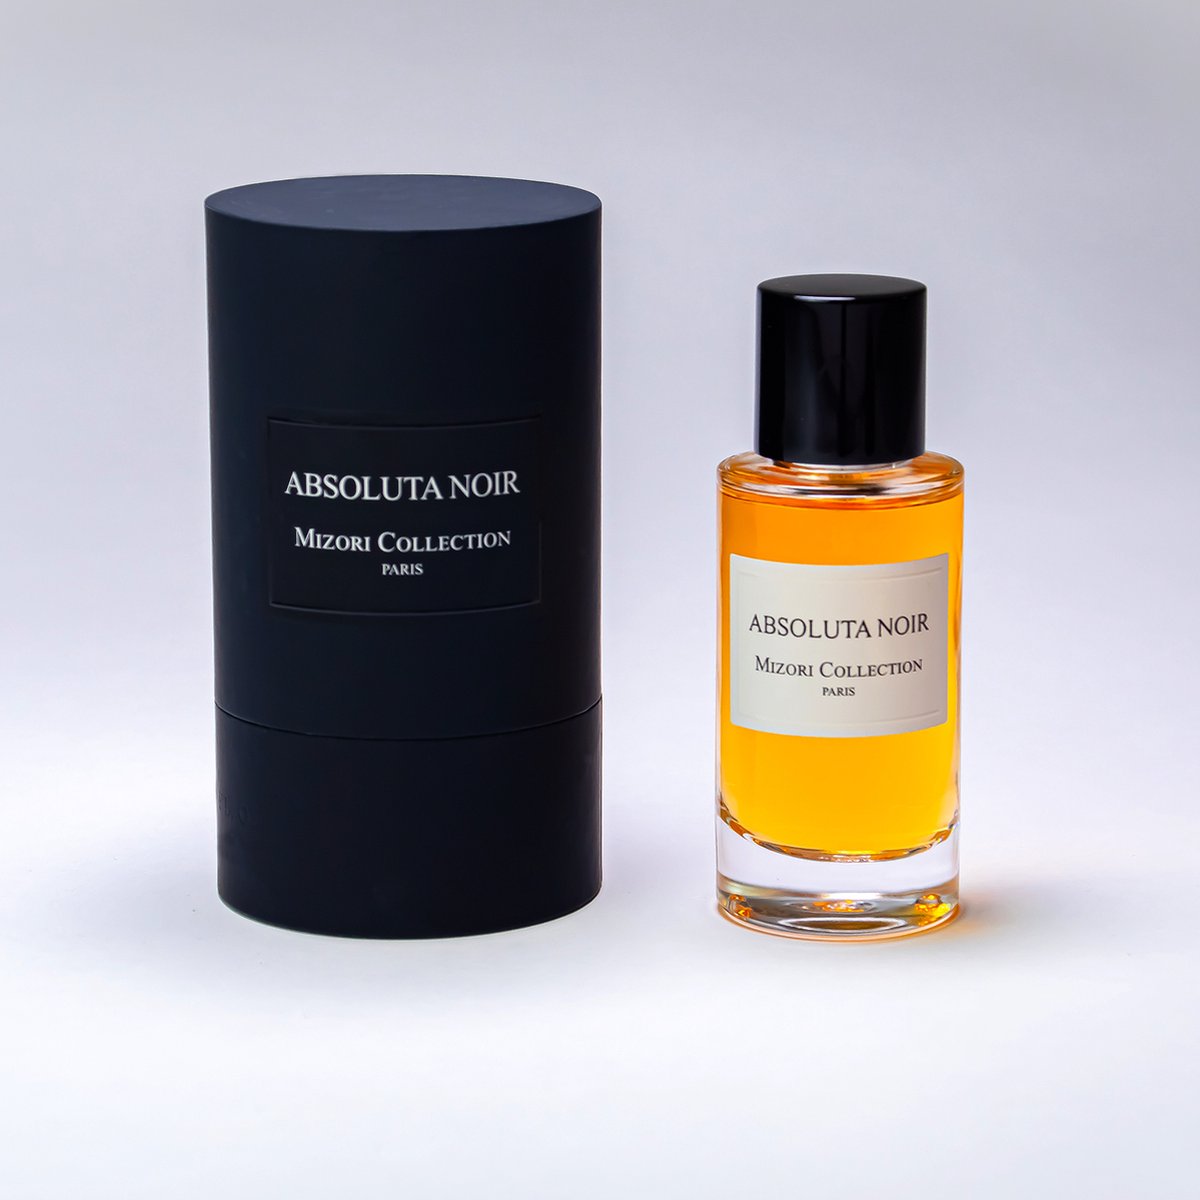 Absoluta Noir - Mizori Collection Paris - High Exclusive Perfume - Eau de Parfum - 50 ml - Niche Perfume